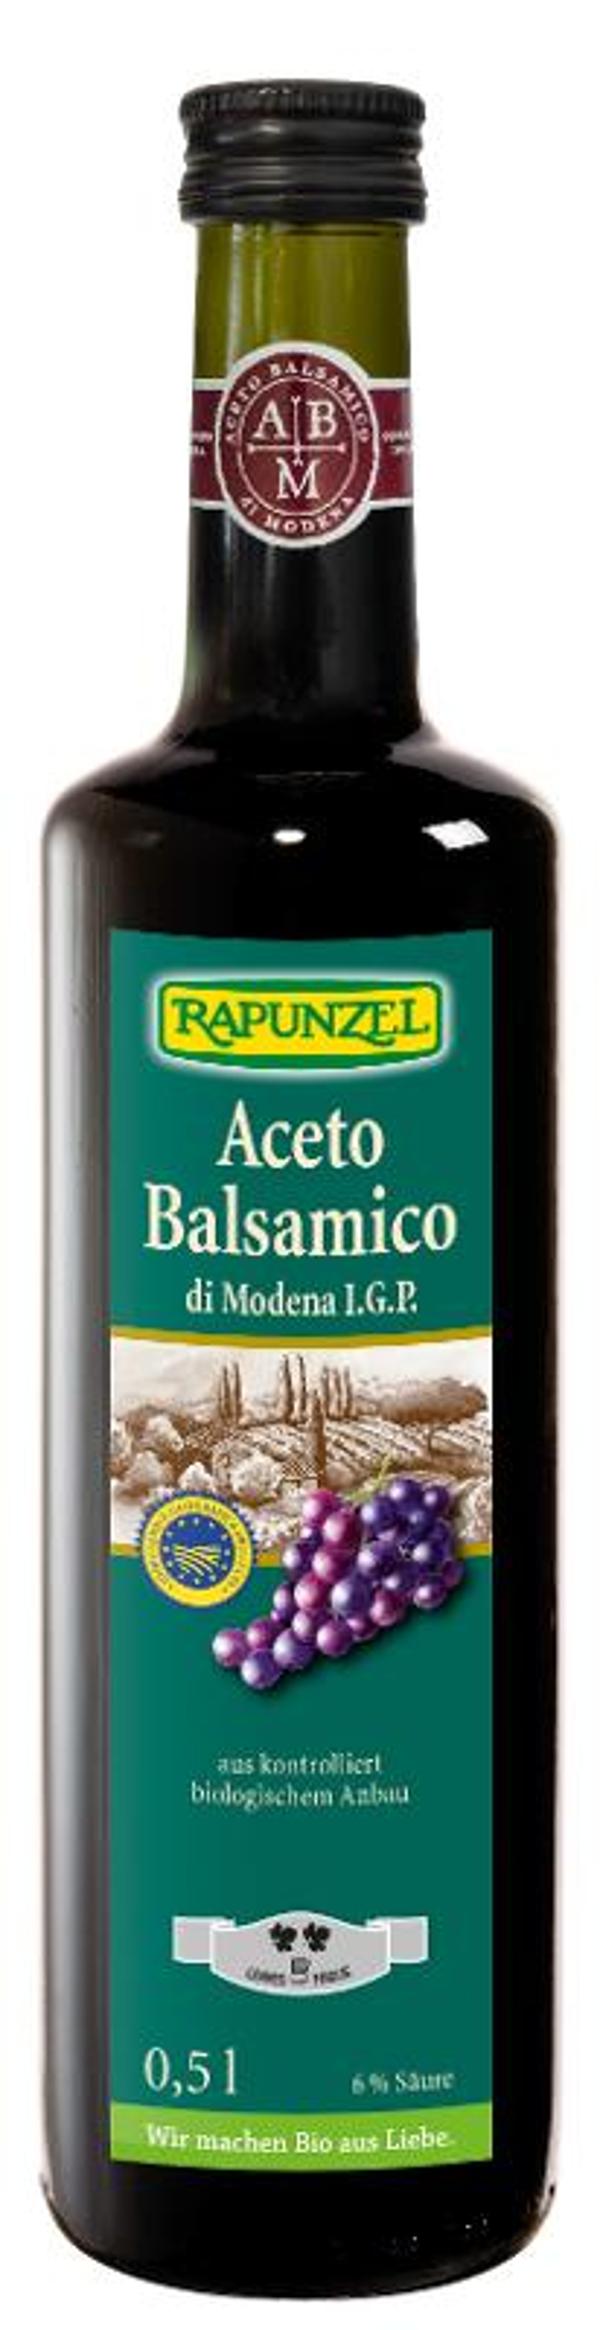 Produktfoto zu Aceto Balsamico di Modena I.G.P. (Rustico)